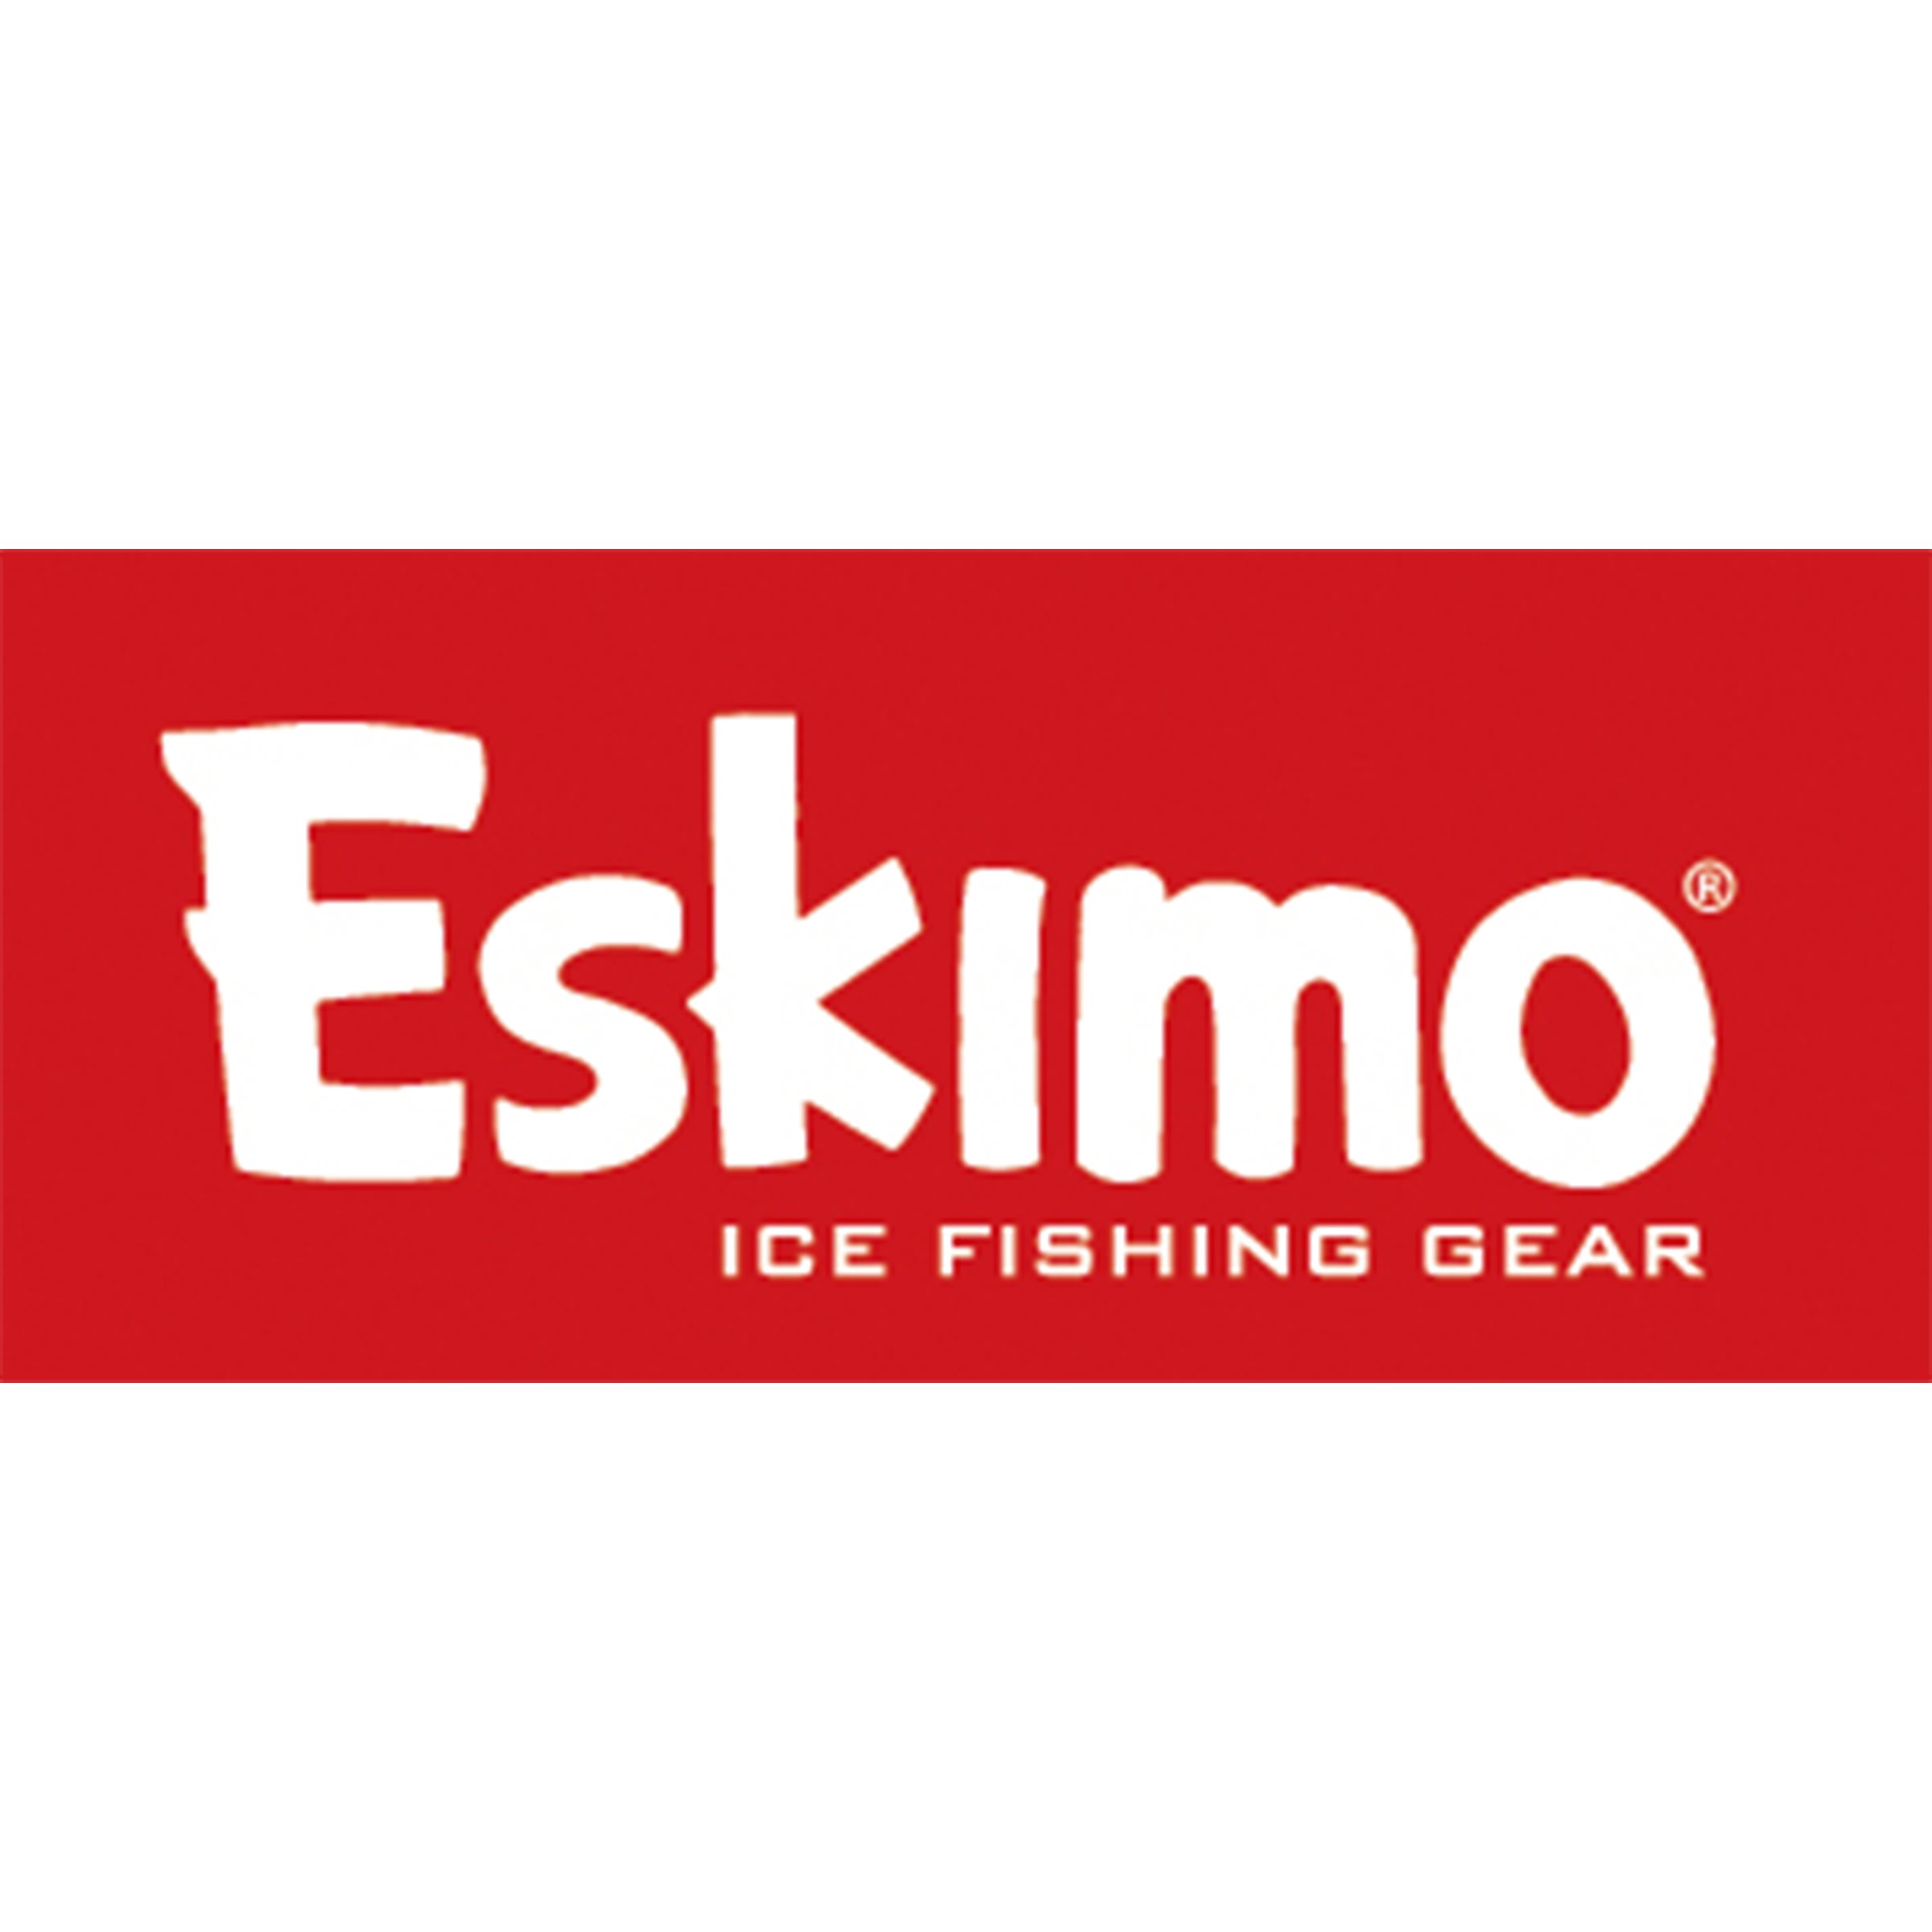 A_eskimo_logo